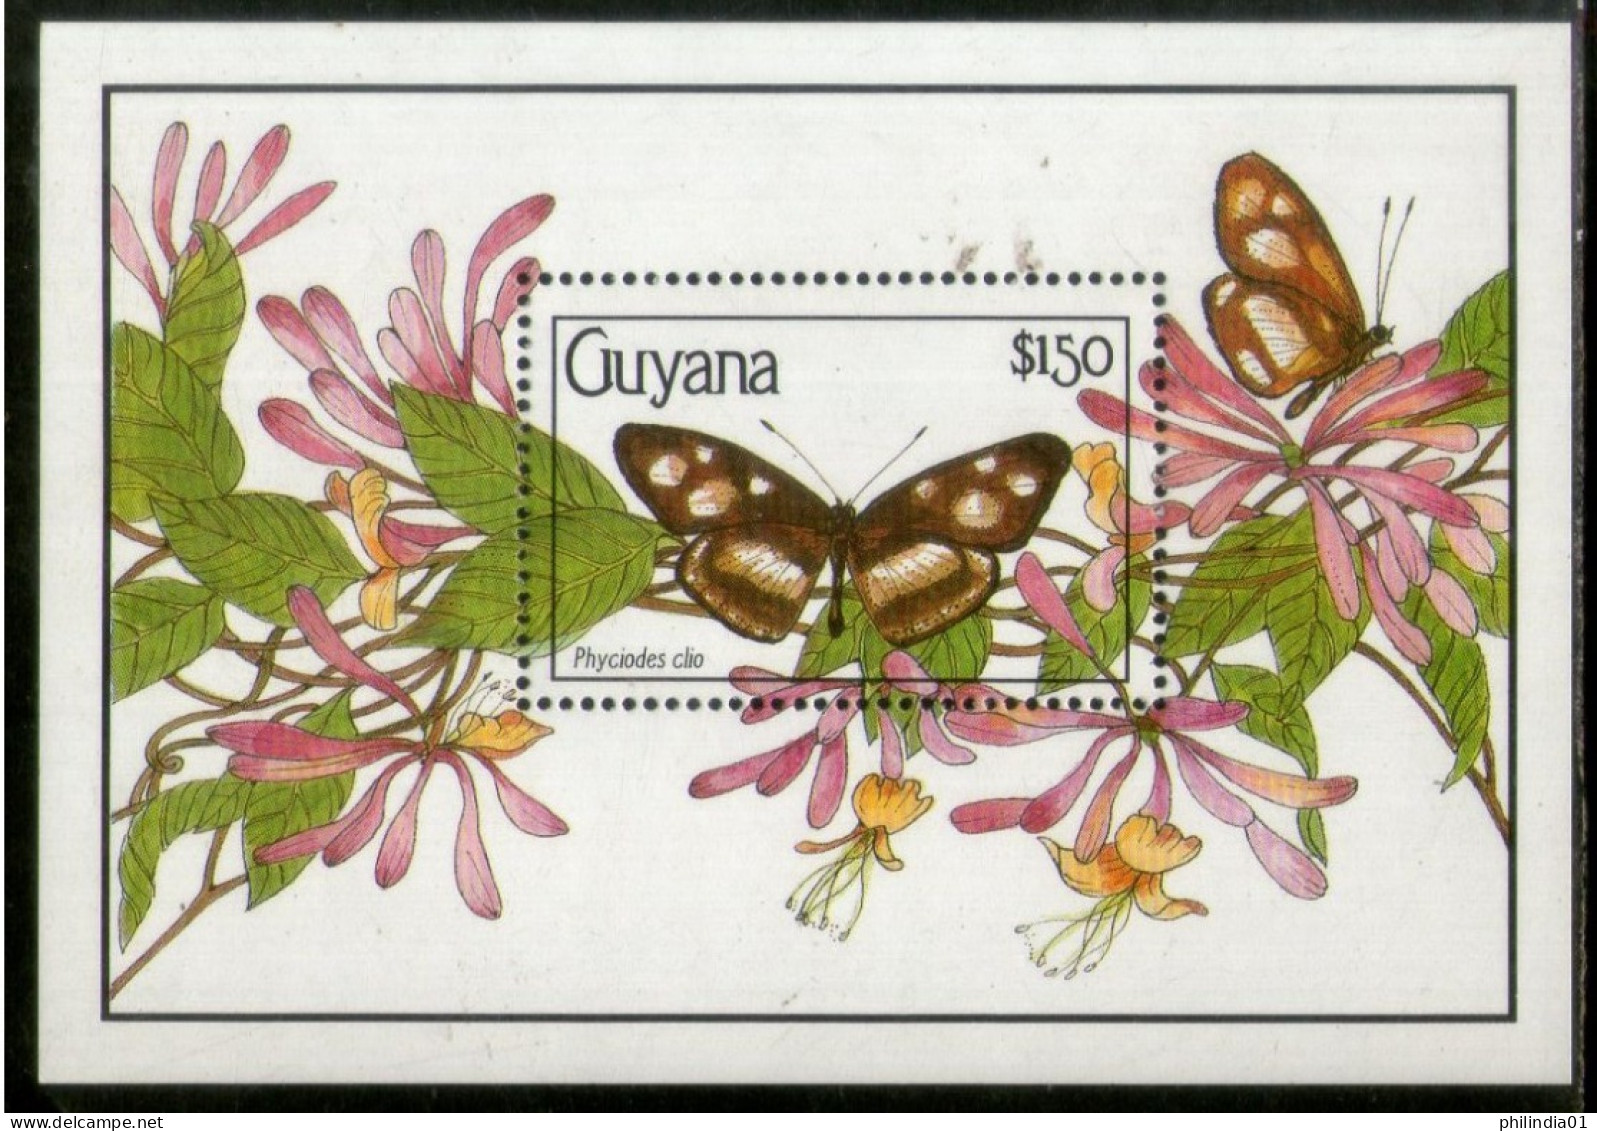 Guyana 1990 Butterflies Moth Insect Sc 2345 M/s MNH # 1860 - Farfalle